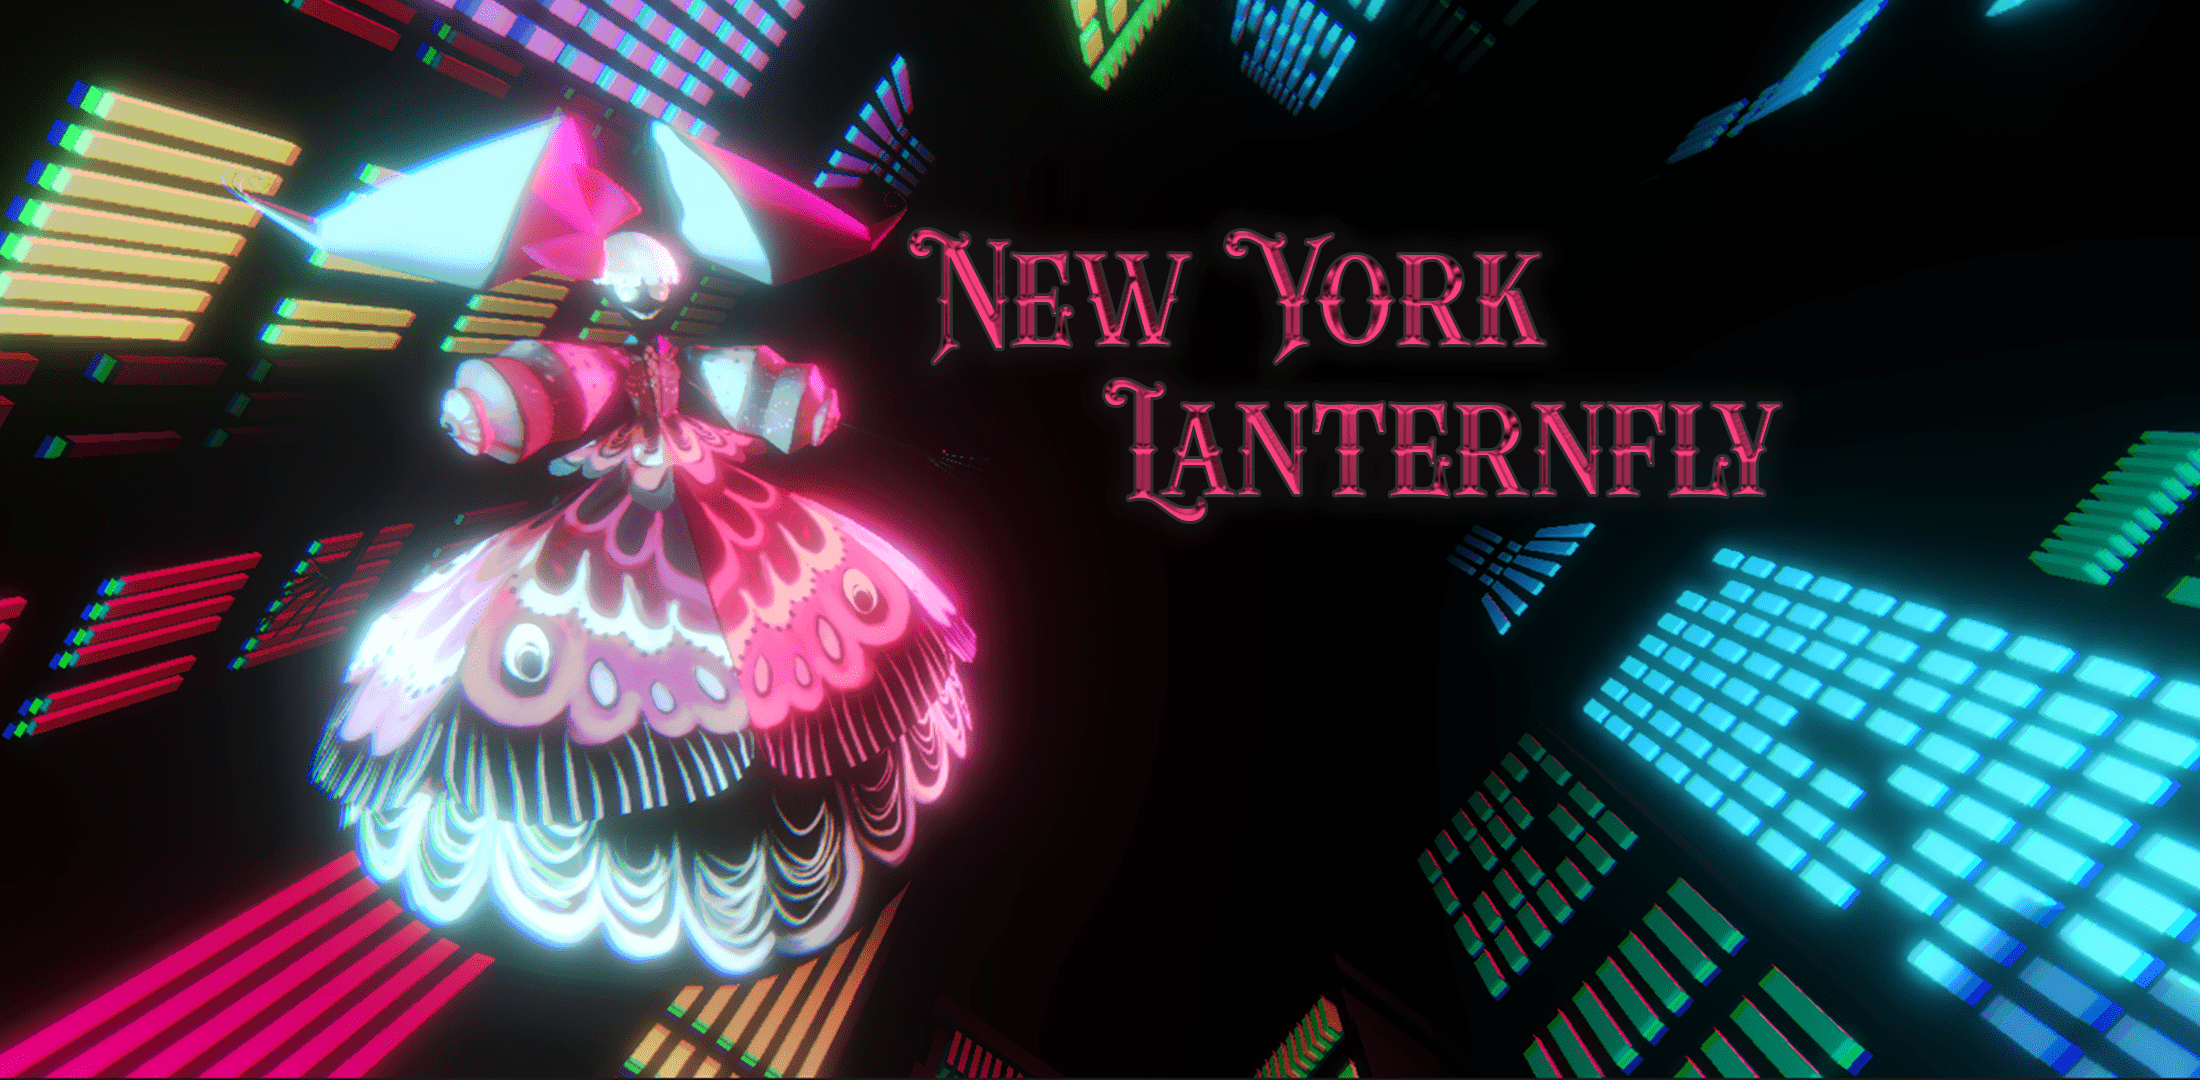 New York Lanternfly